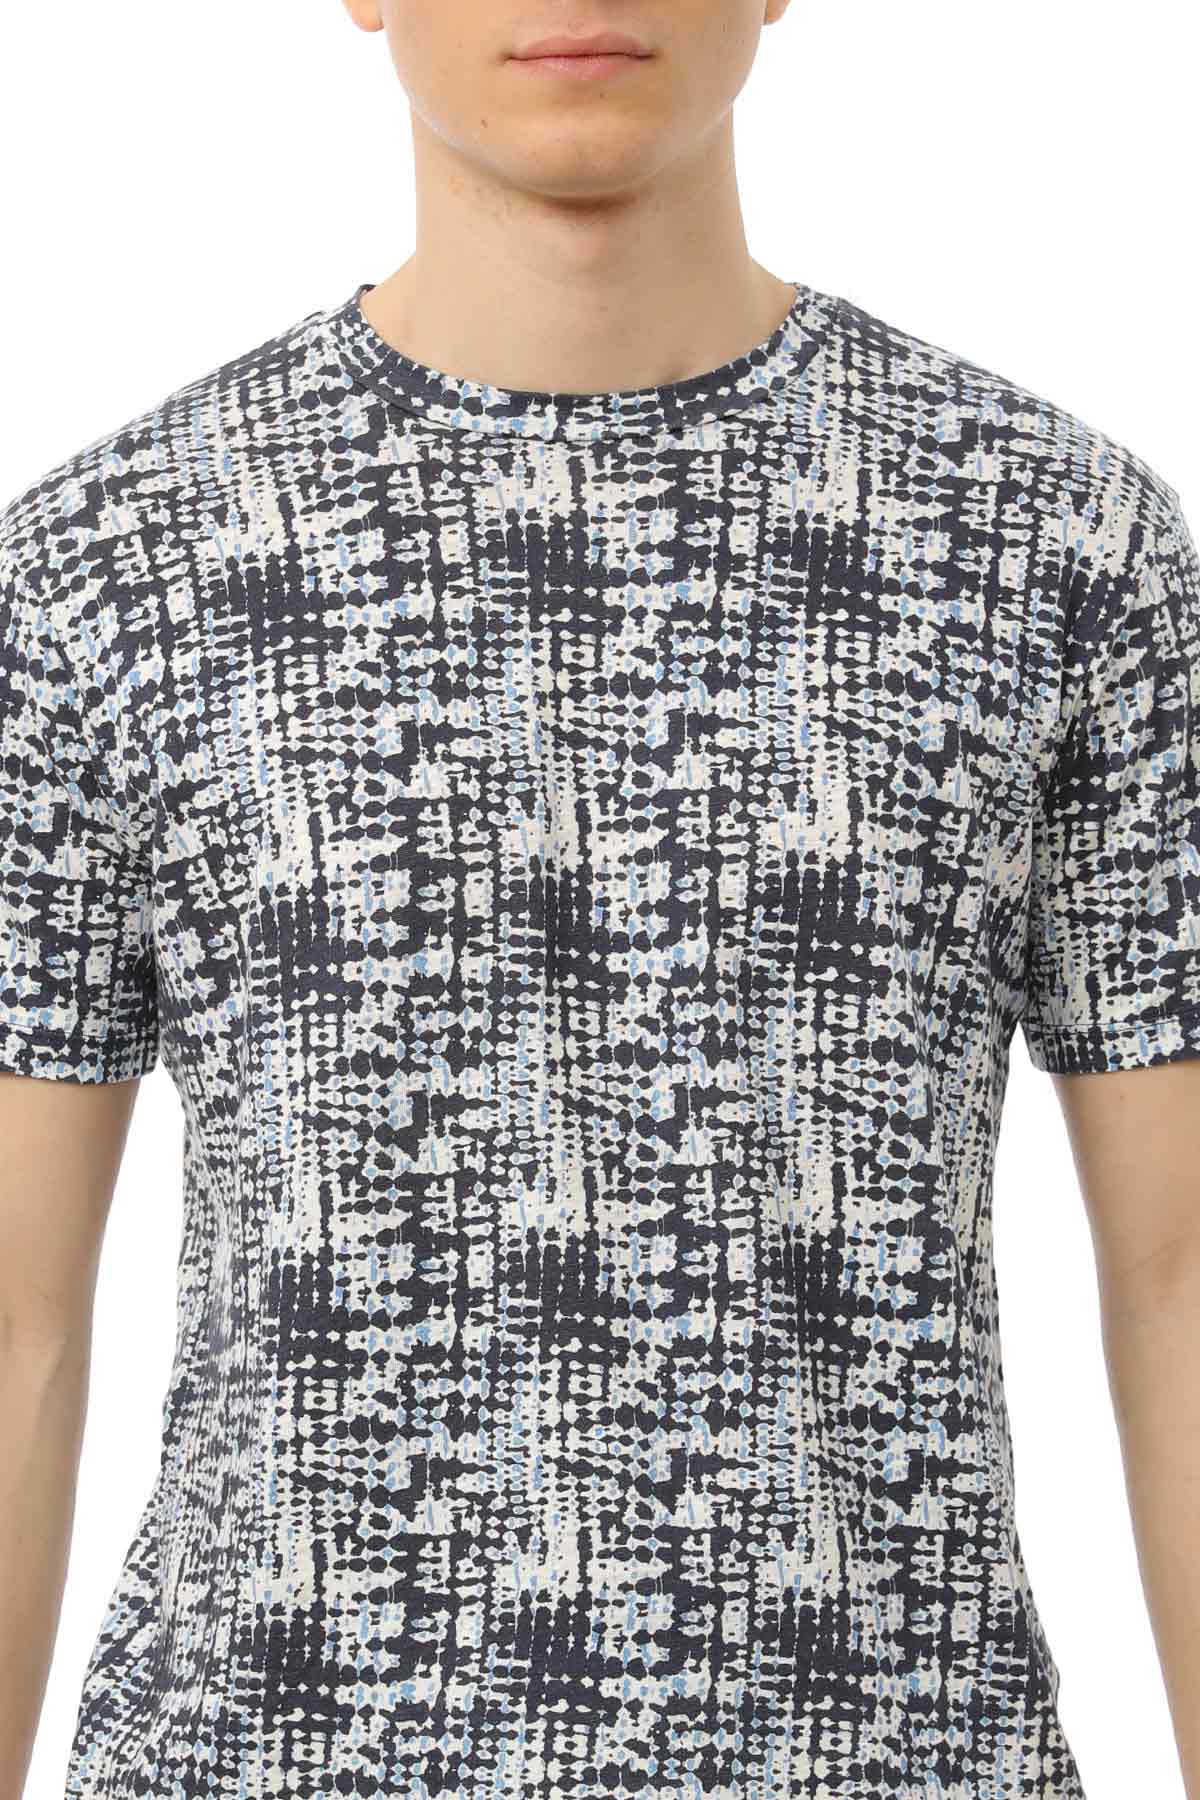 Manifattura Keten T-shirt-Libas Trendy Fashion Store